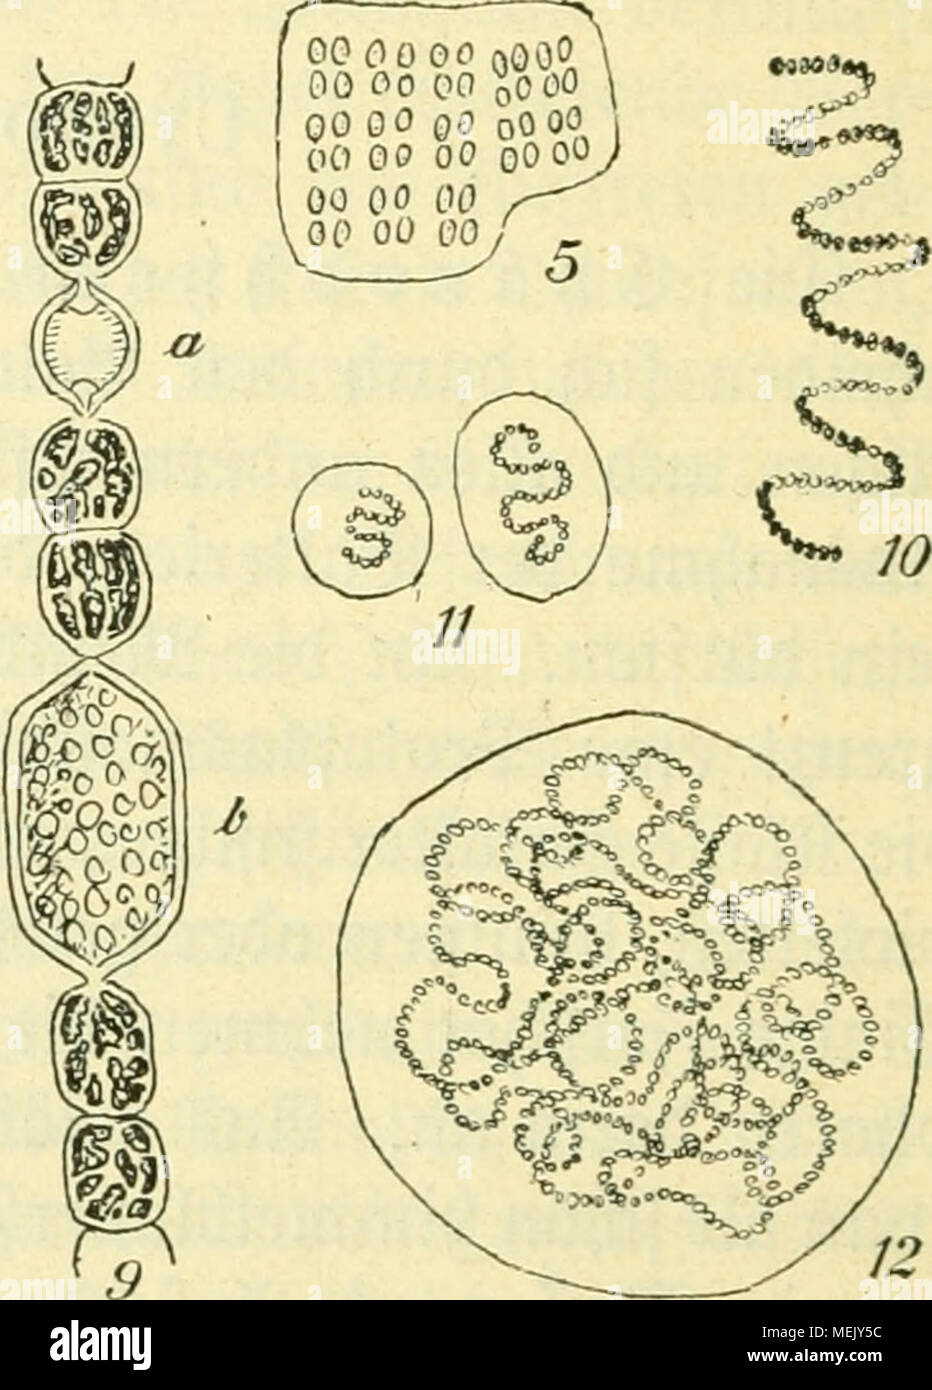 . Die Algen, Moose und Farnpflanzen. . £af. I. l. (Sdjemabeä 93aue§ ber£t)anobrjv)ceenseile: a Sentralforper, b äußere pefärbte ^rotoblaSmafdjicfrt, c Membran. 2. Gloeocapsa polydermatica. 3. Microcystis (Clathrocystis) aeruginosa. 4. Coelosphaerium Kützingianurn, b Optiker &amp;uerfd)mtt. 5. Merismopedia. 6. Oscillatoria. 7. Phormidium viiide. 8. Arthrospira (Spirulina) Jenneri. 9. Anabaena macrospora mit .t&gt;ereroct)[te (a) uub ©bore (b). 10. Anabaeua spiroides. 11. Nostoc, iuugc Kolonien. 12. Nostoc, ältere Volonte. 13. Nostoc, feimenbe ©bore. 14. Scytonema mirabile, faTfd)e ^ergiueigung. Stock Photo